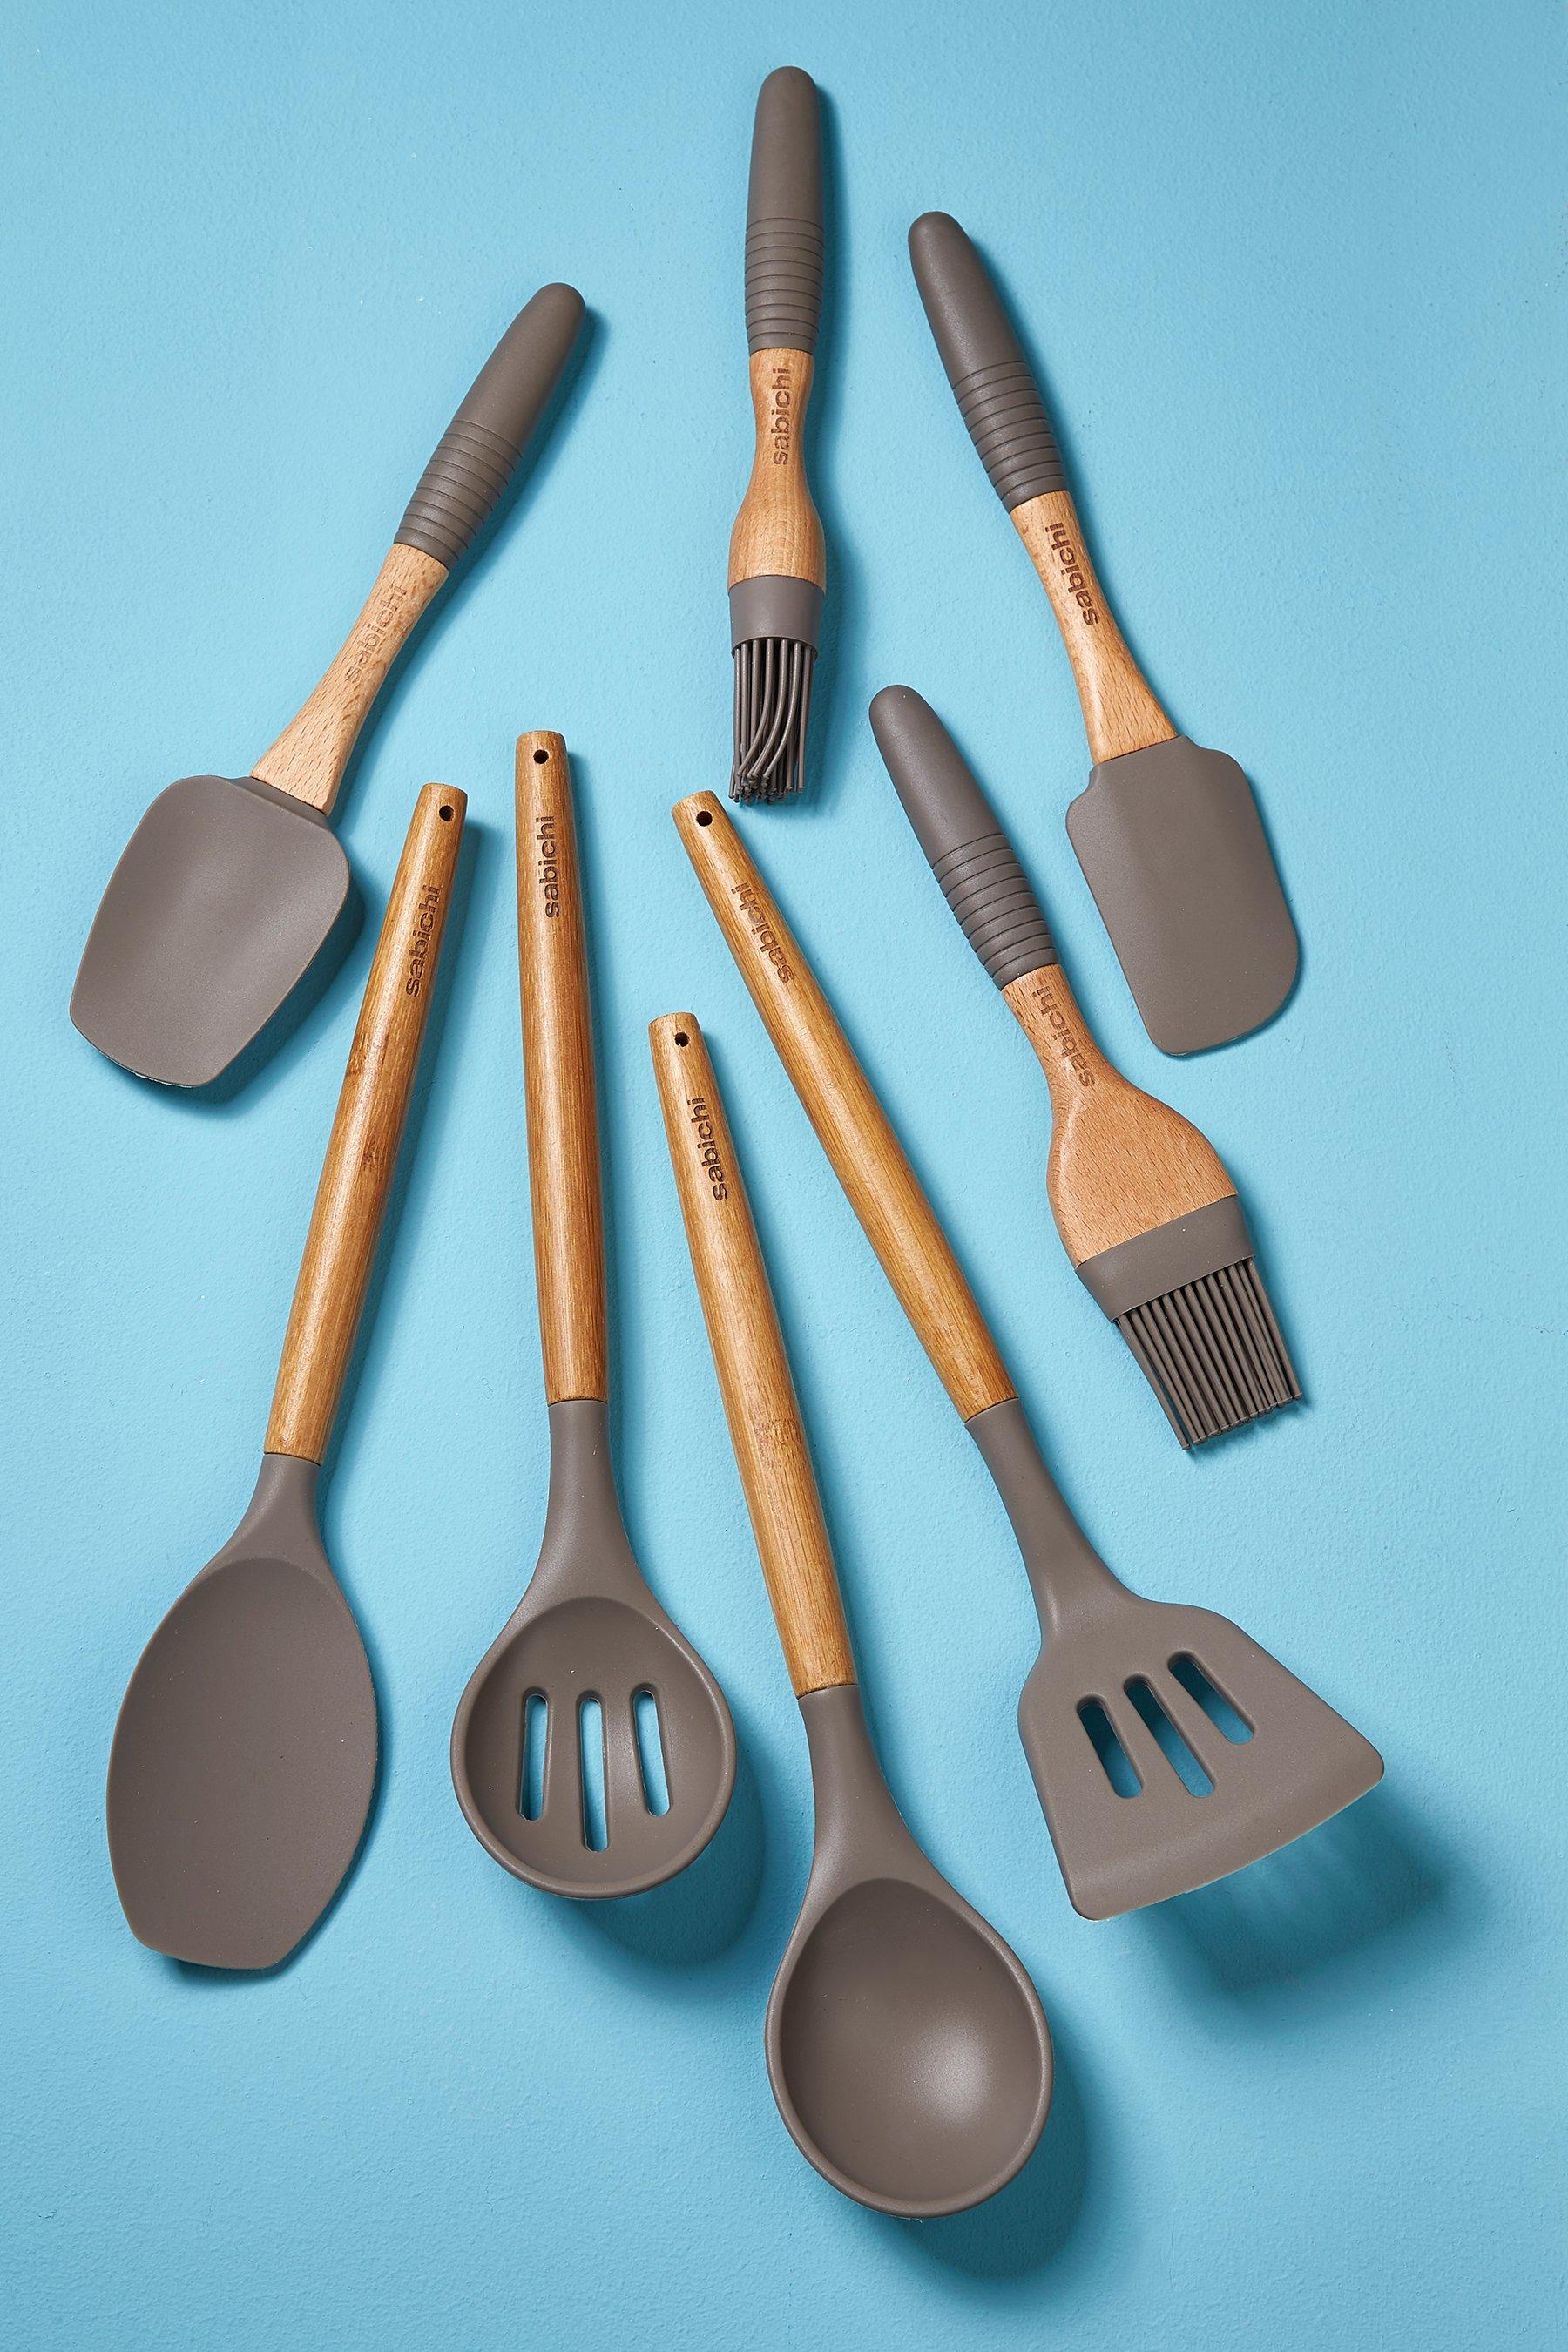 sabichi 8 piece silicone utensil set - grey